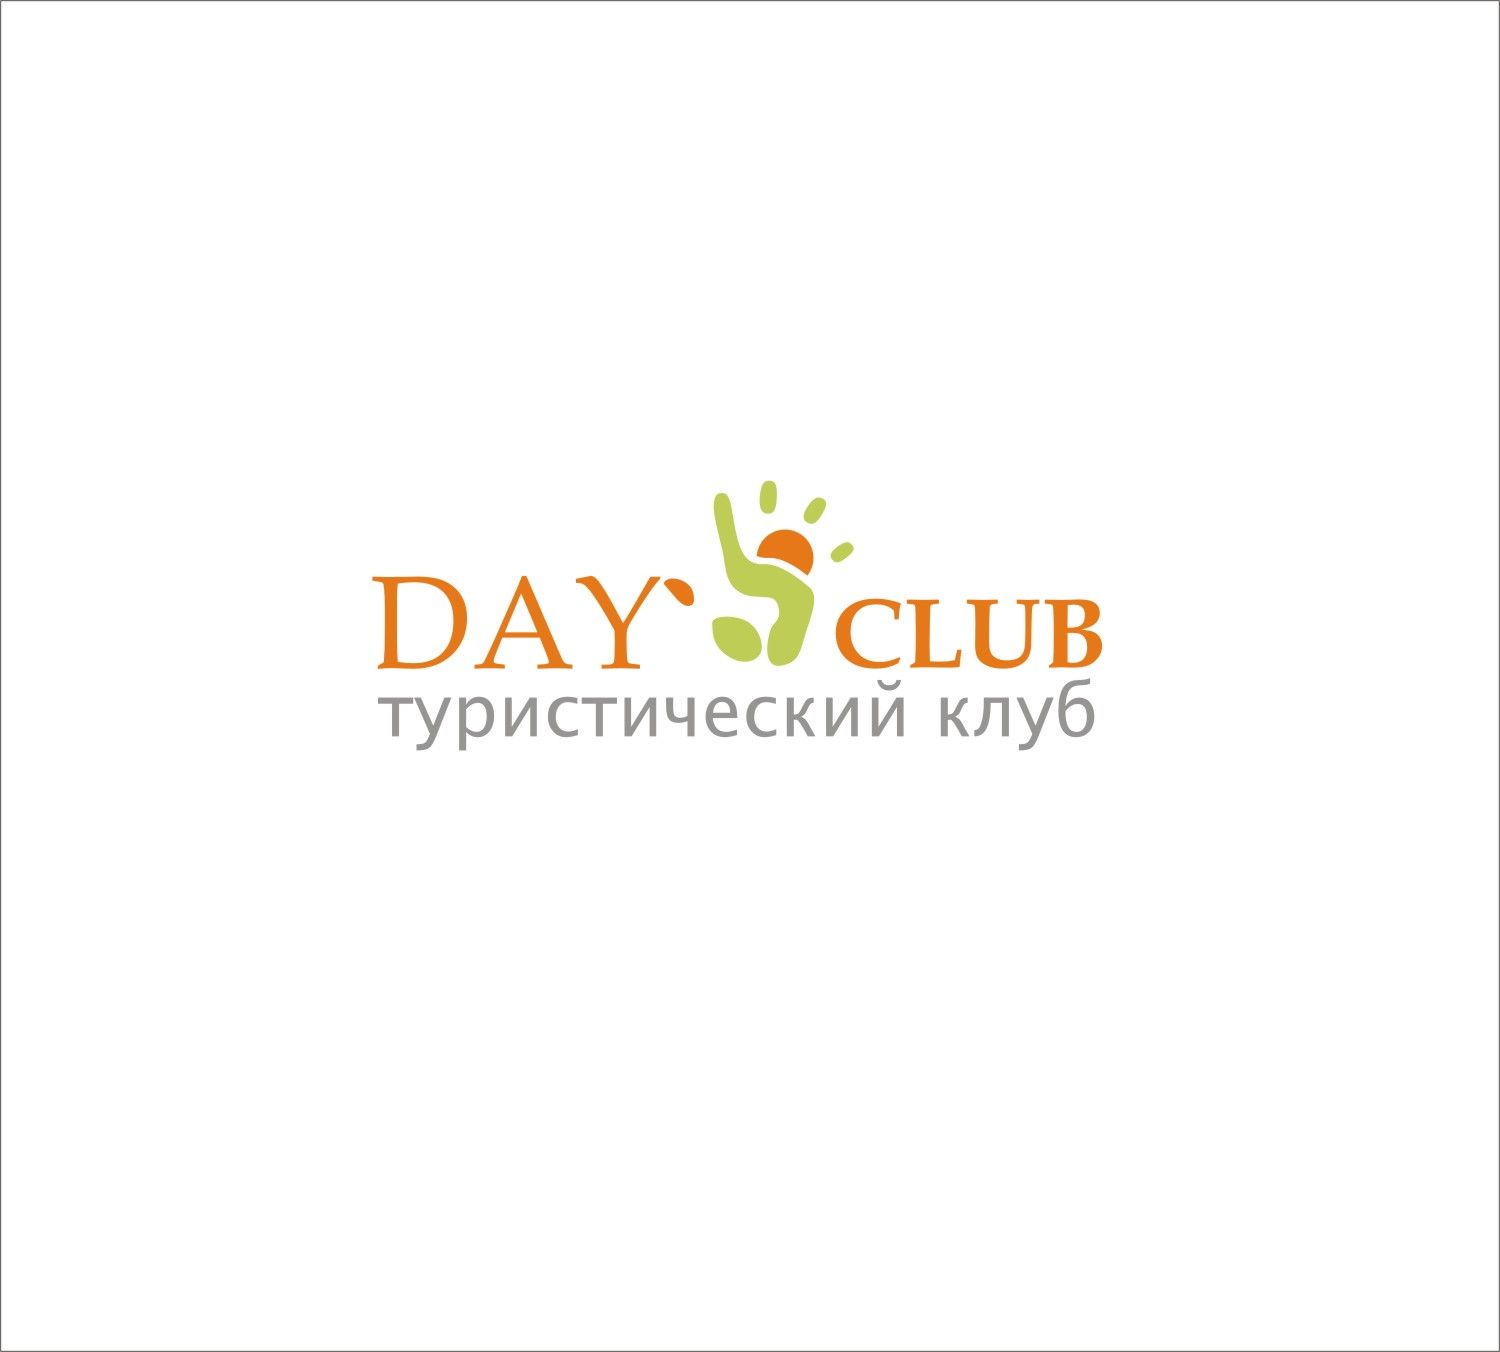 Логотип для Дай 5 Клуб (day5club) - дизайнер s-one